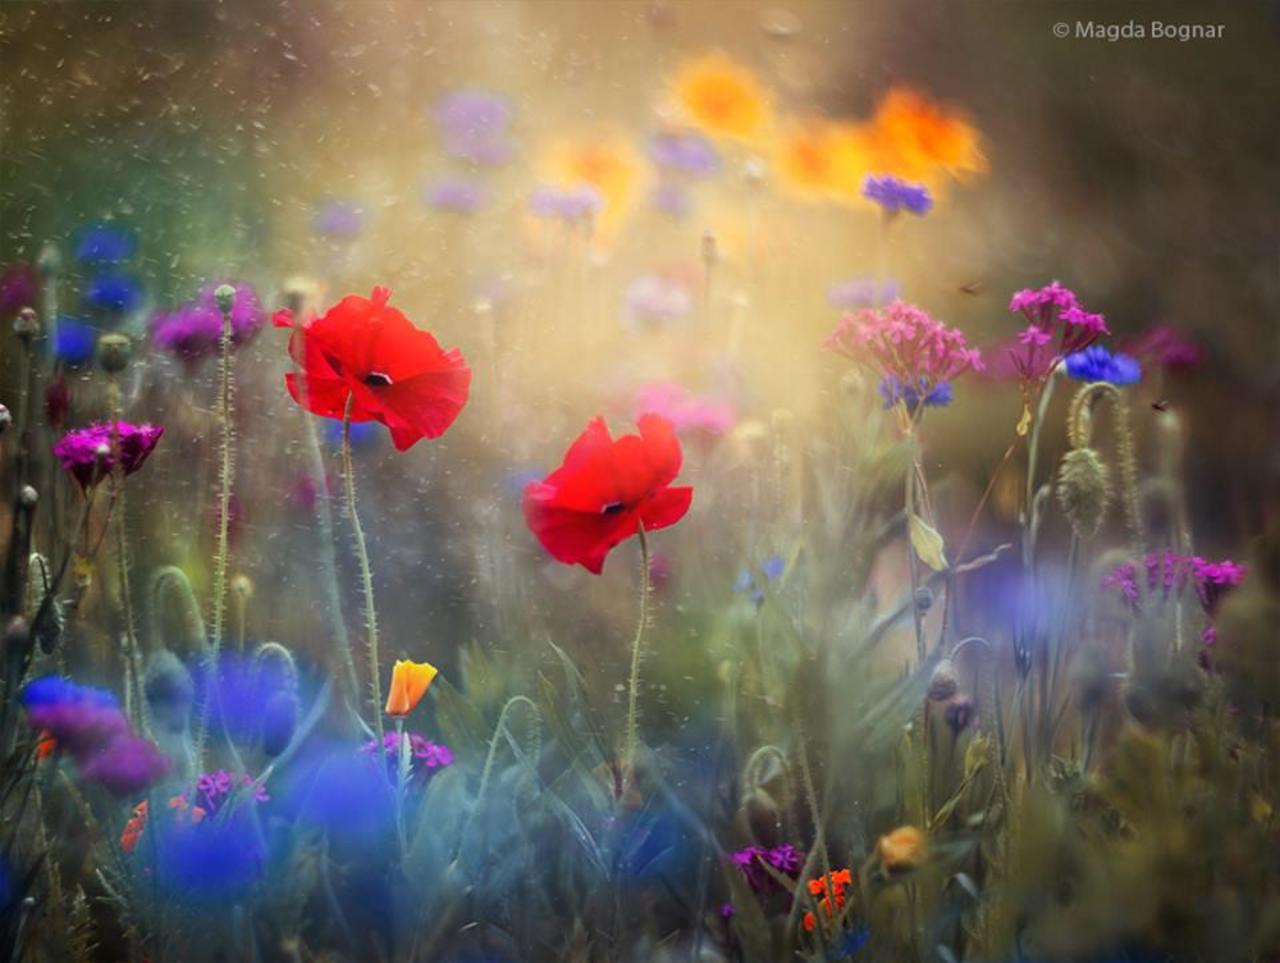 “@mjesusgz: Spring by Magda Bognar - #photo #art #artwit #twitart #spring #nature http://t.co/1Su2N9BSKV”#Beautiful